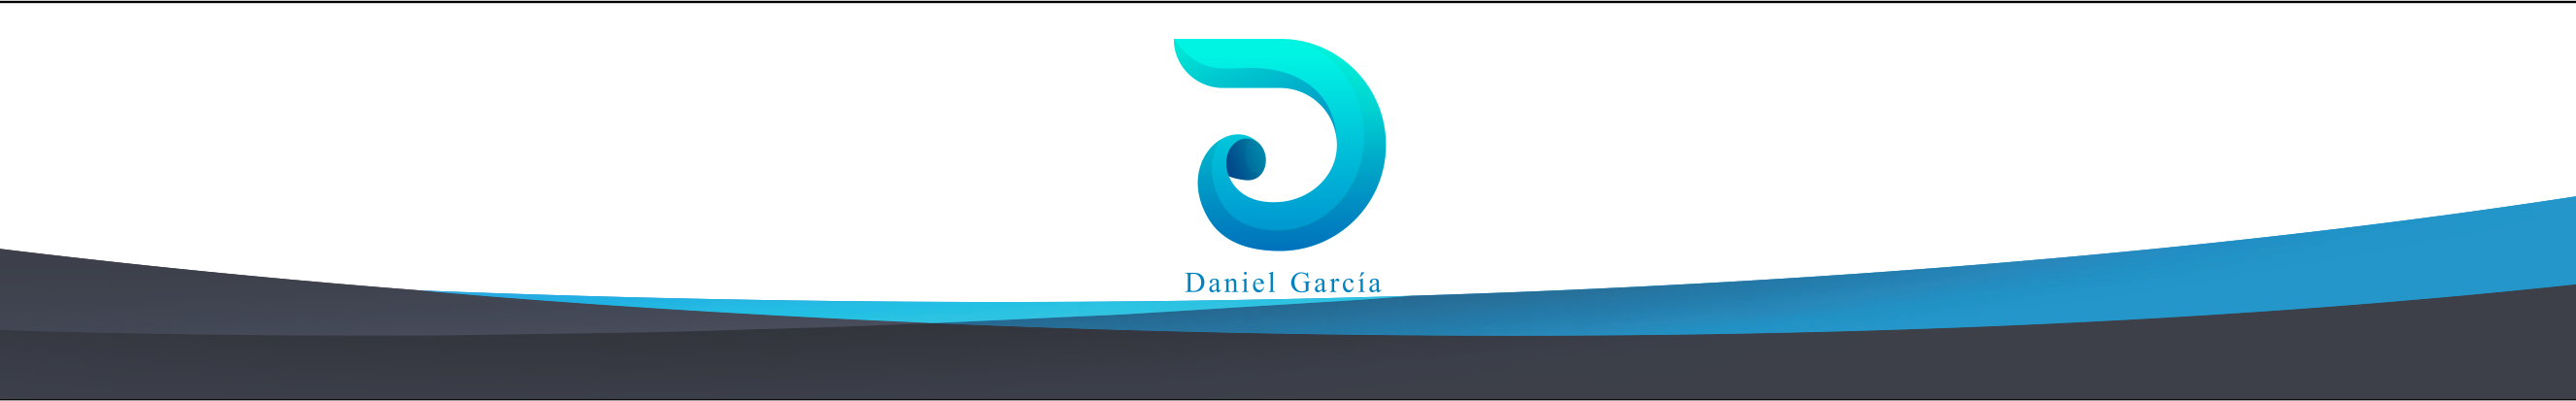 Daniel garcia's profile banner